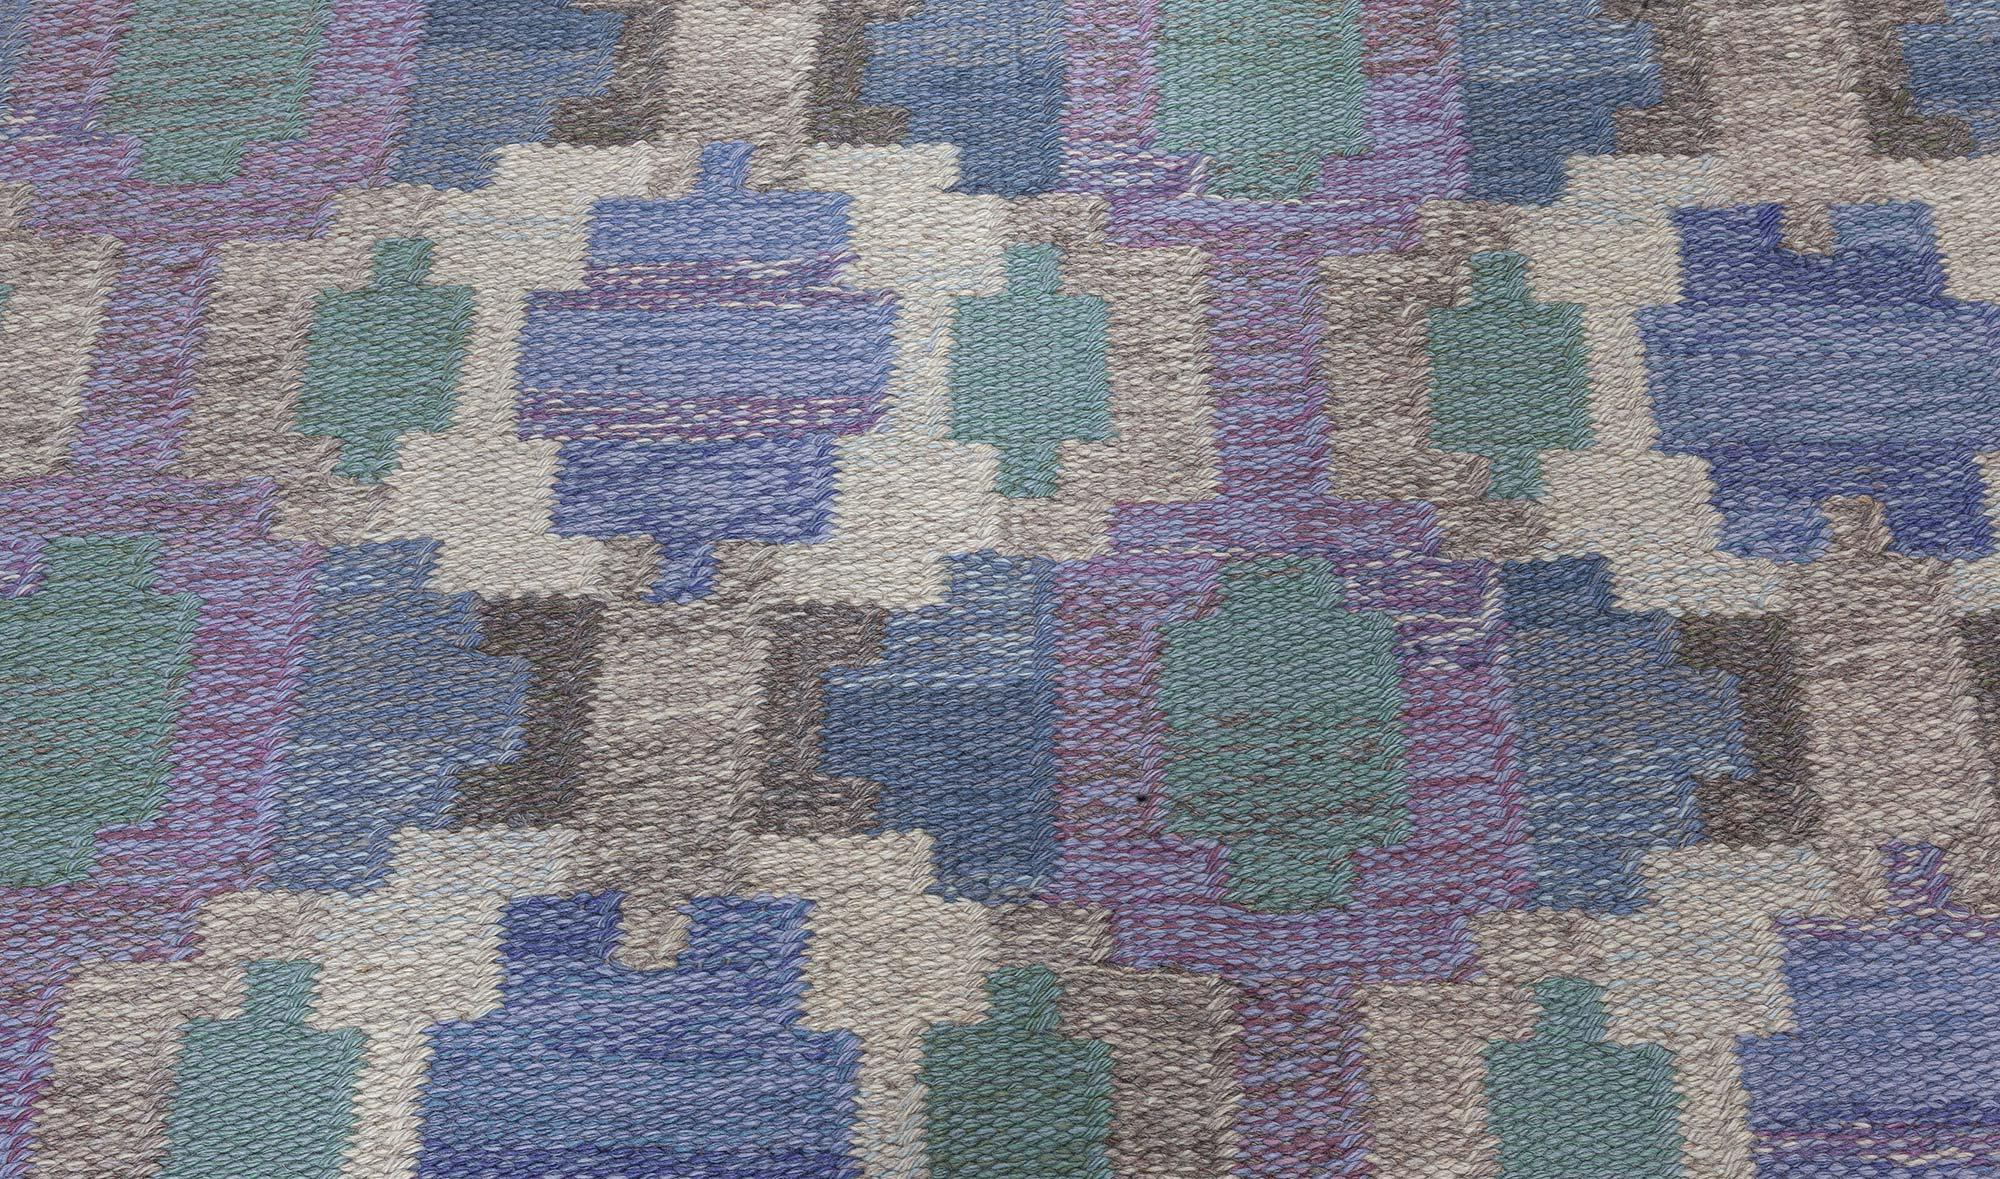 Mid-20th Century Swedish flat woven rug by Judith Johansson
Size: 5'5